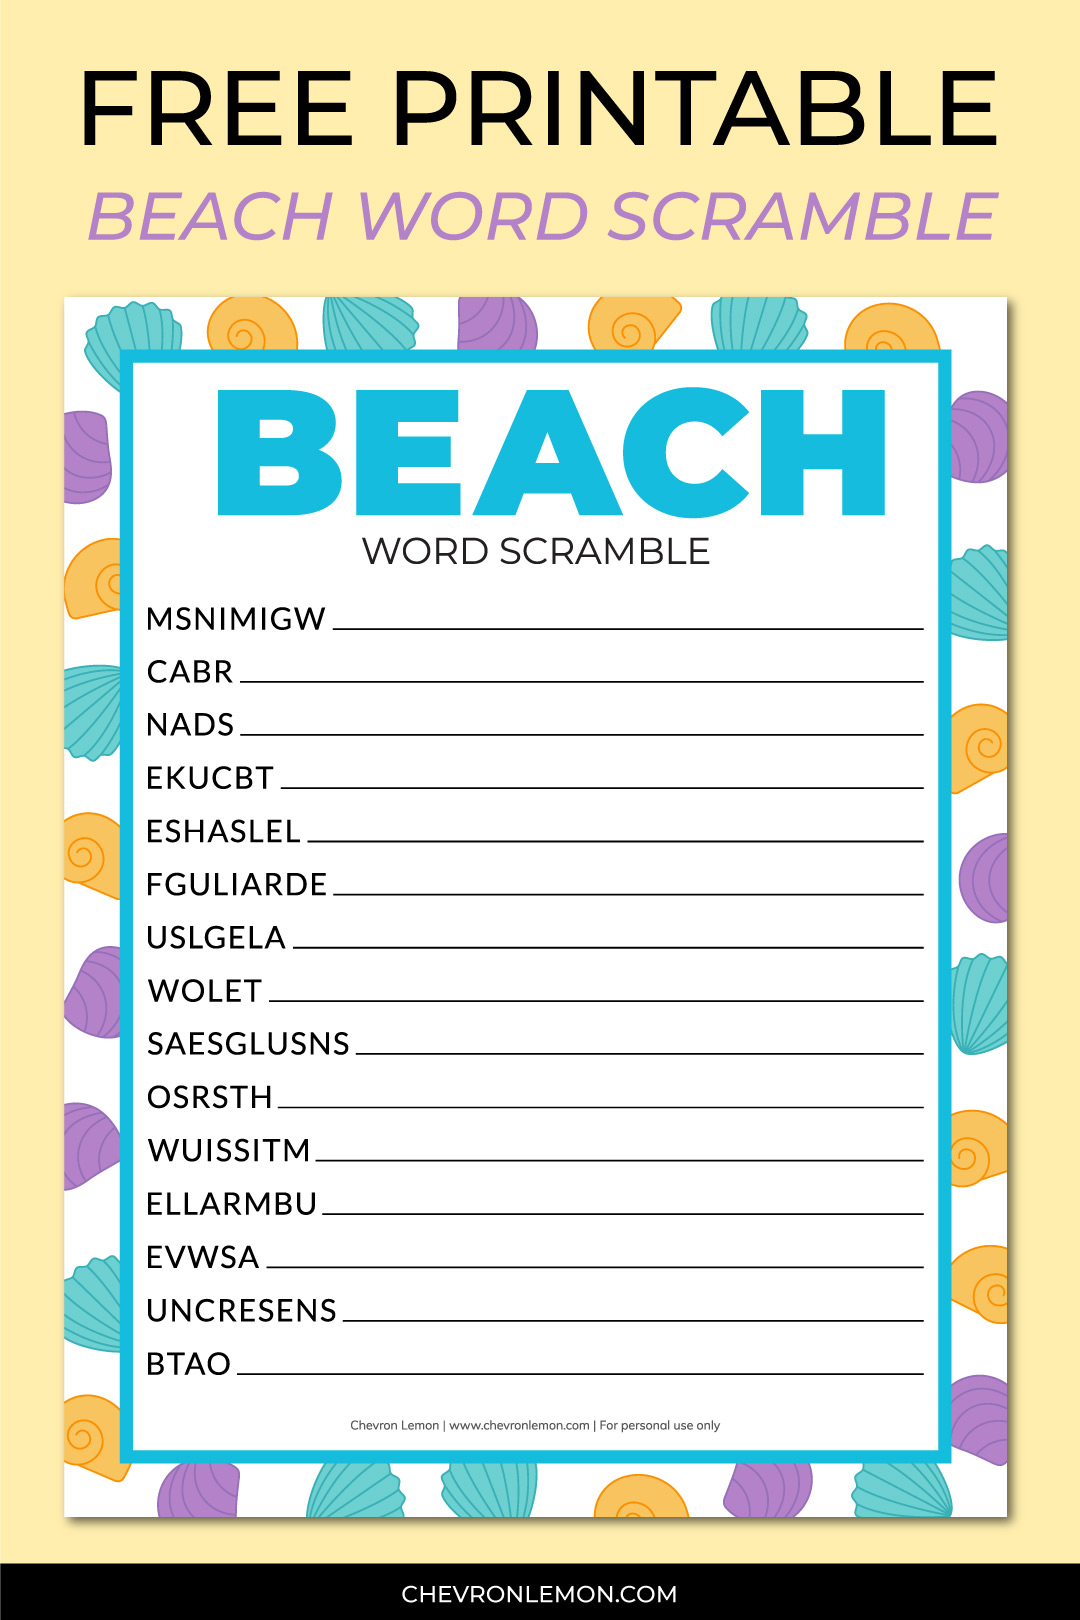 Beach word scramble